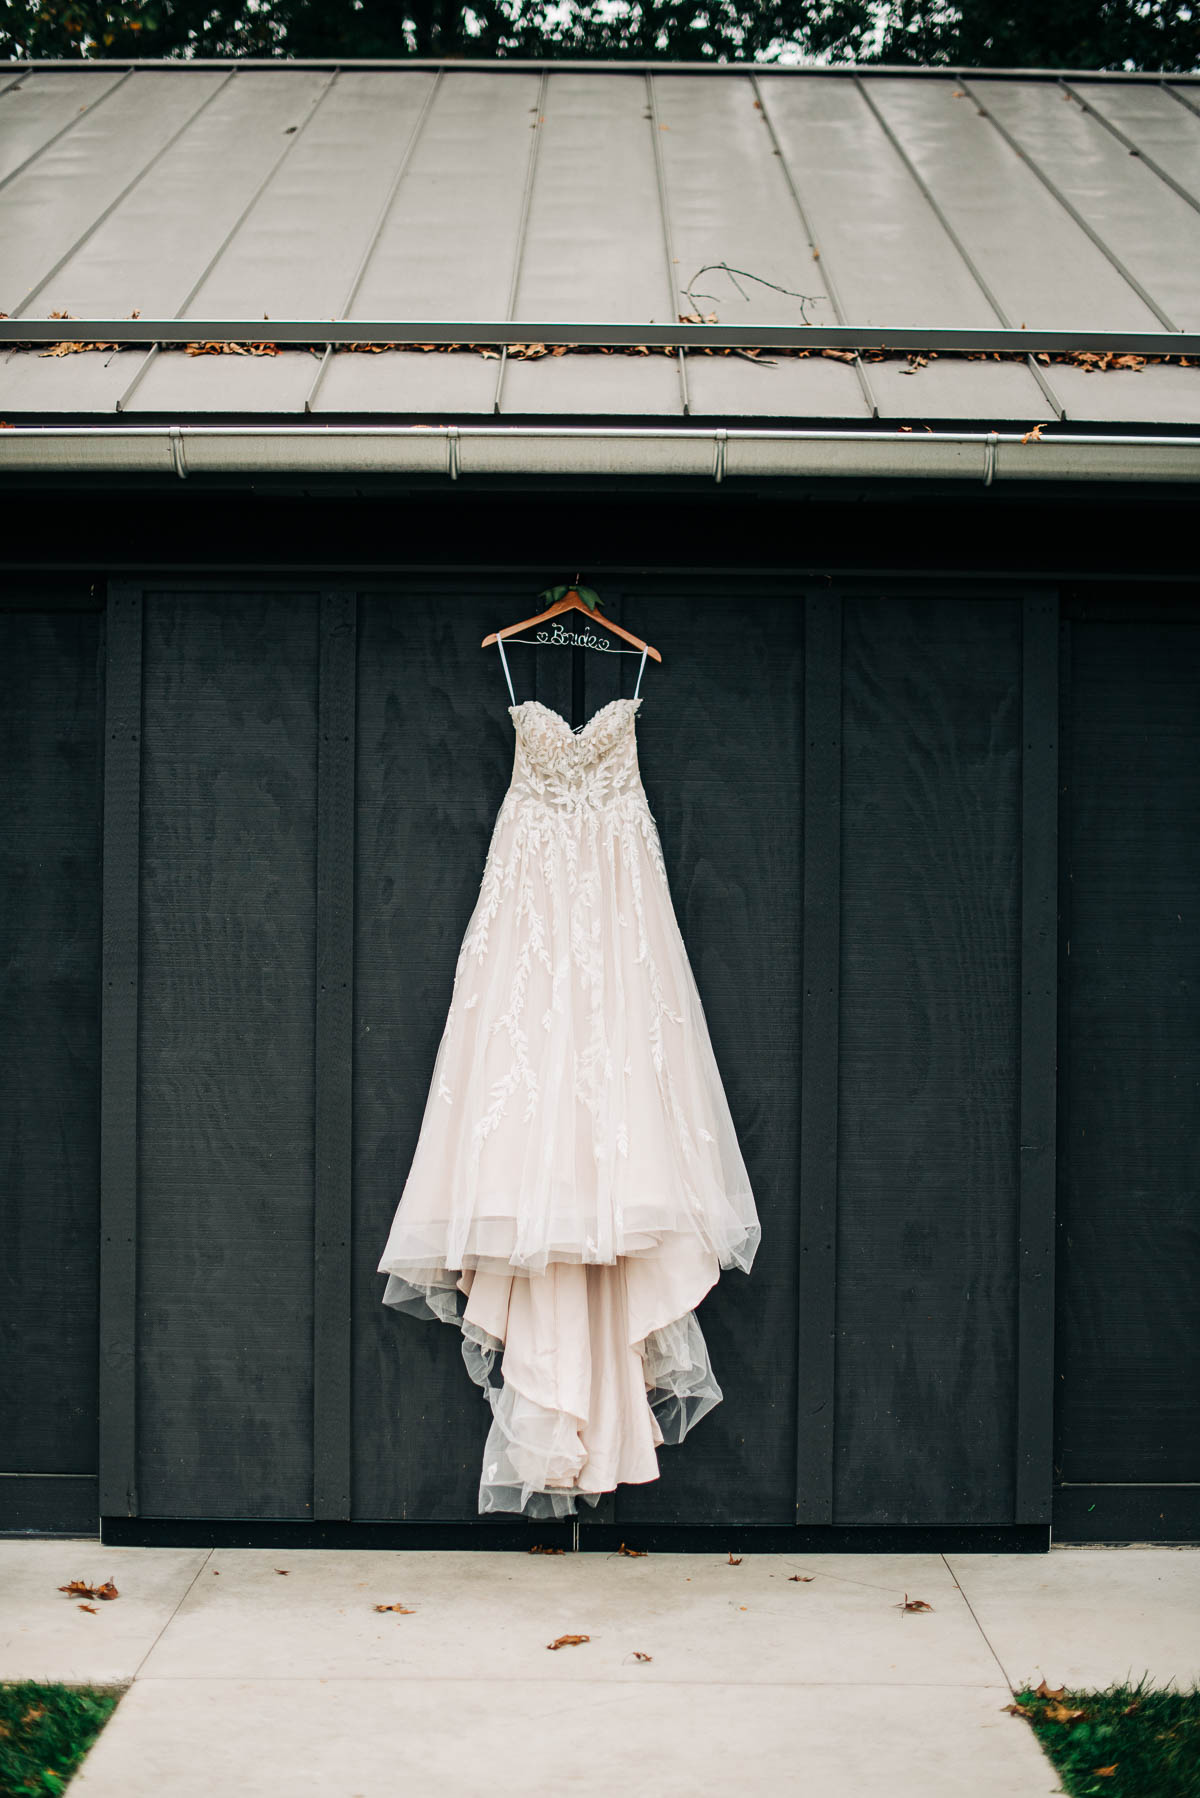 Bride's wedding dress hanging on an outbuilding at Jorgensen's Oak Grove